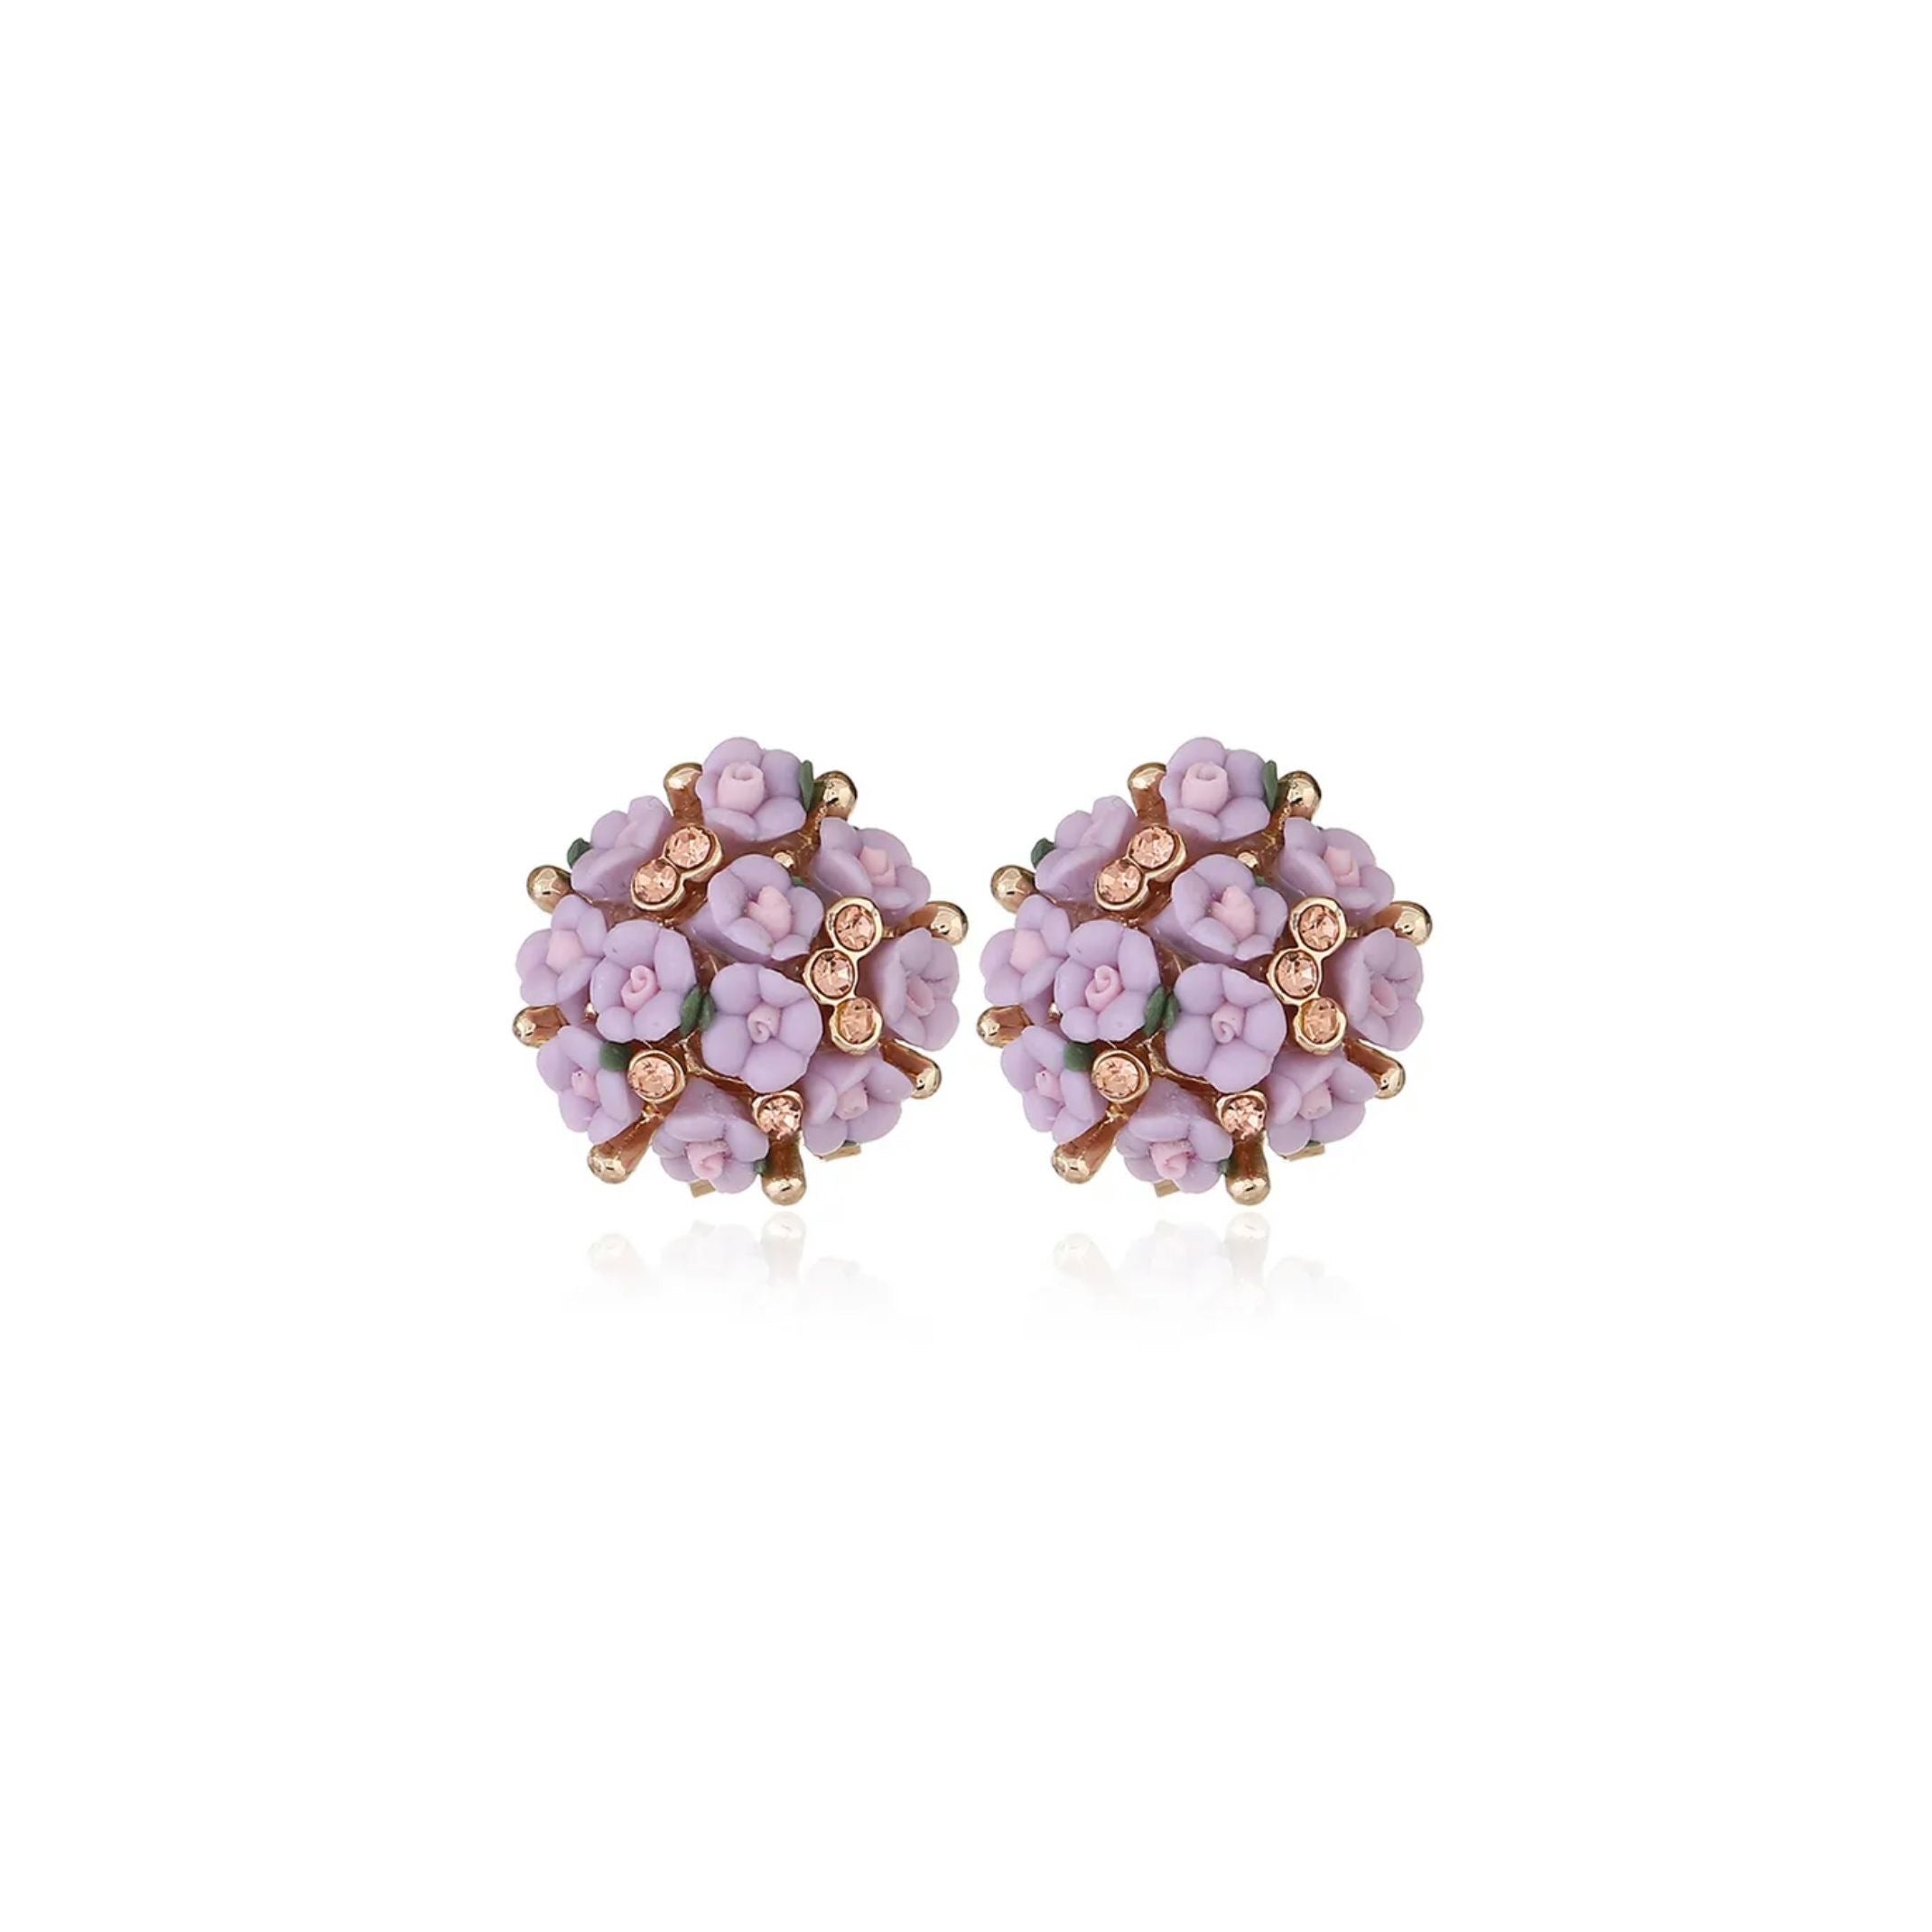 Lilac stud earrings